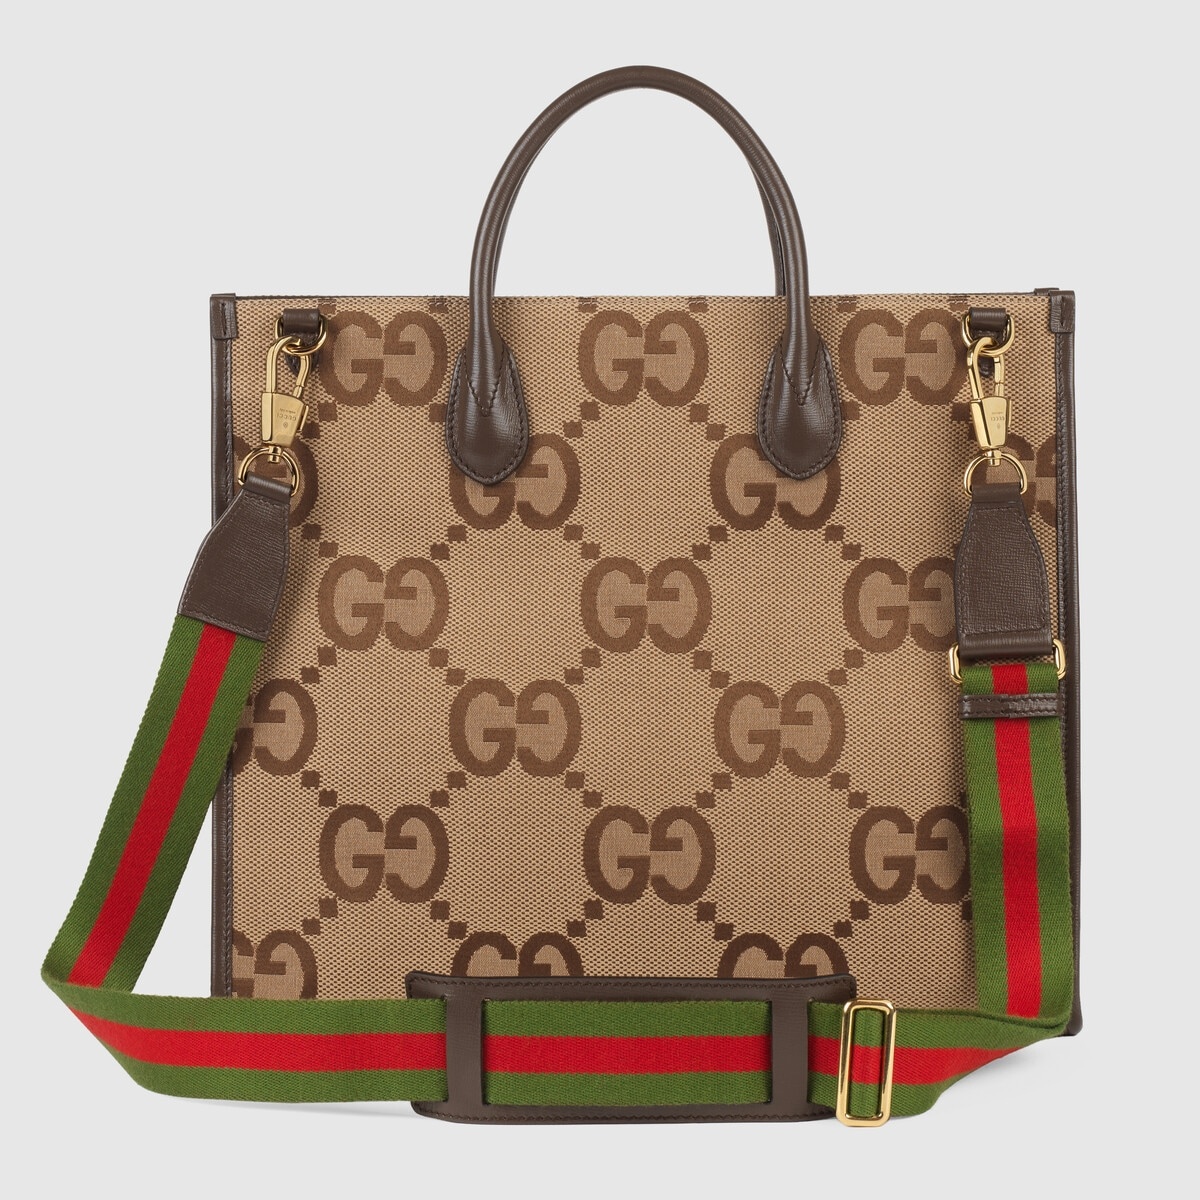 Gucci Diana jumbo GG mini tote bag in camel and ebony canvas